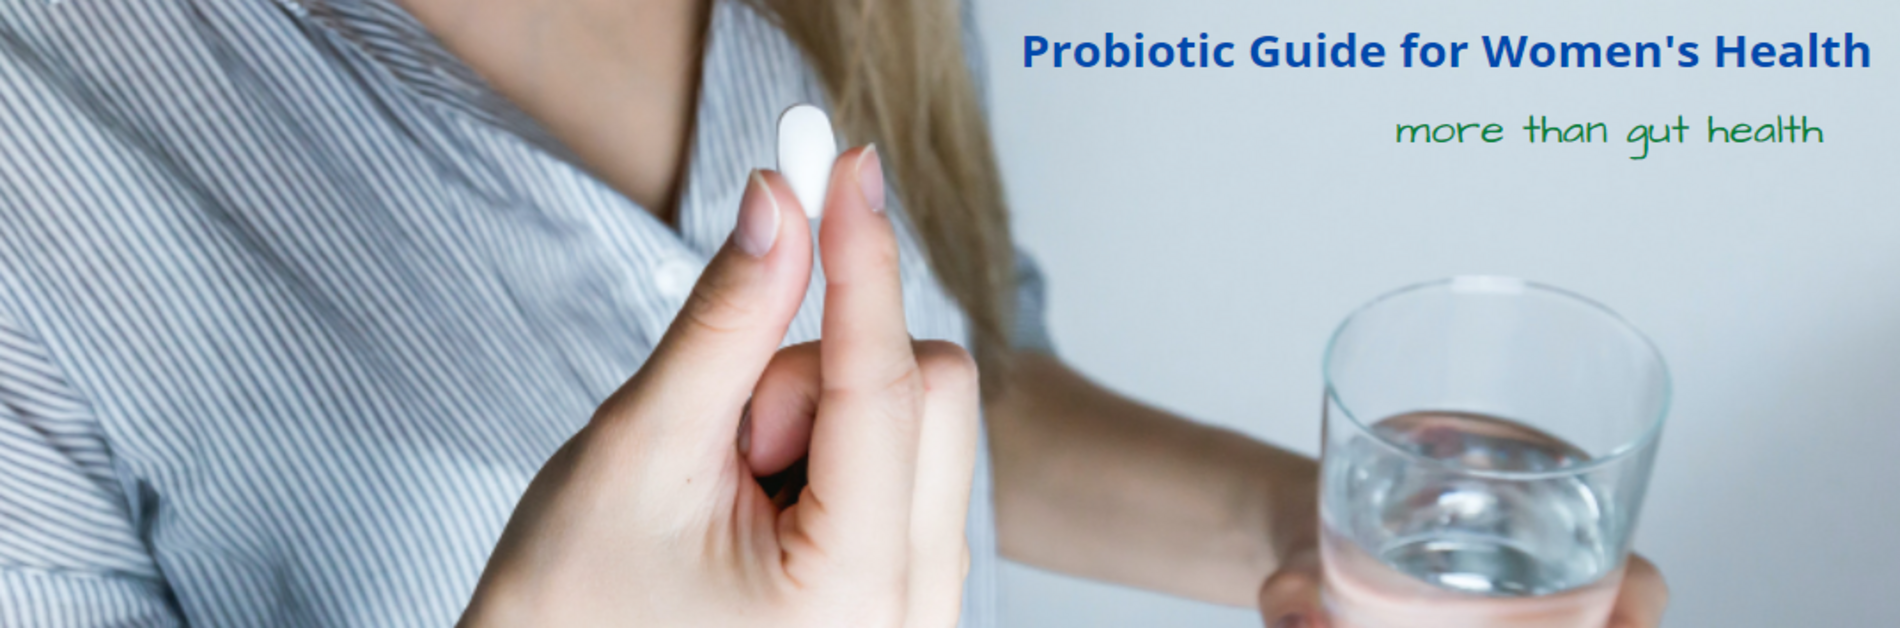 probiotics for yeast infections